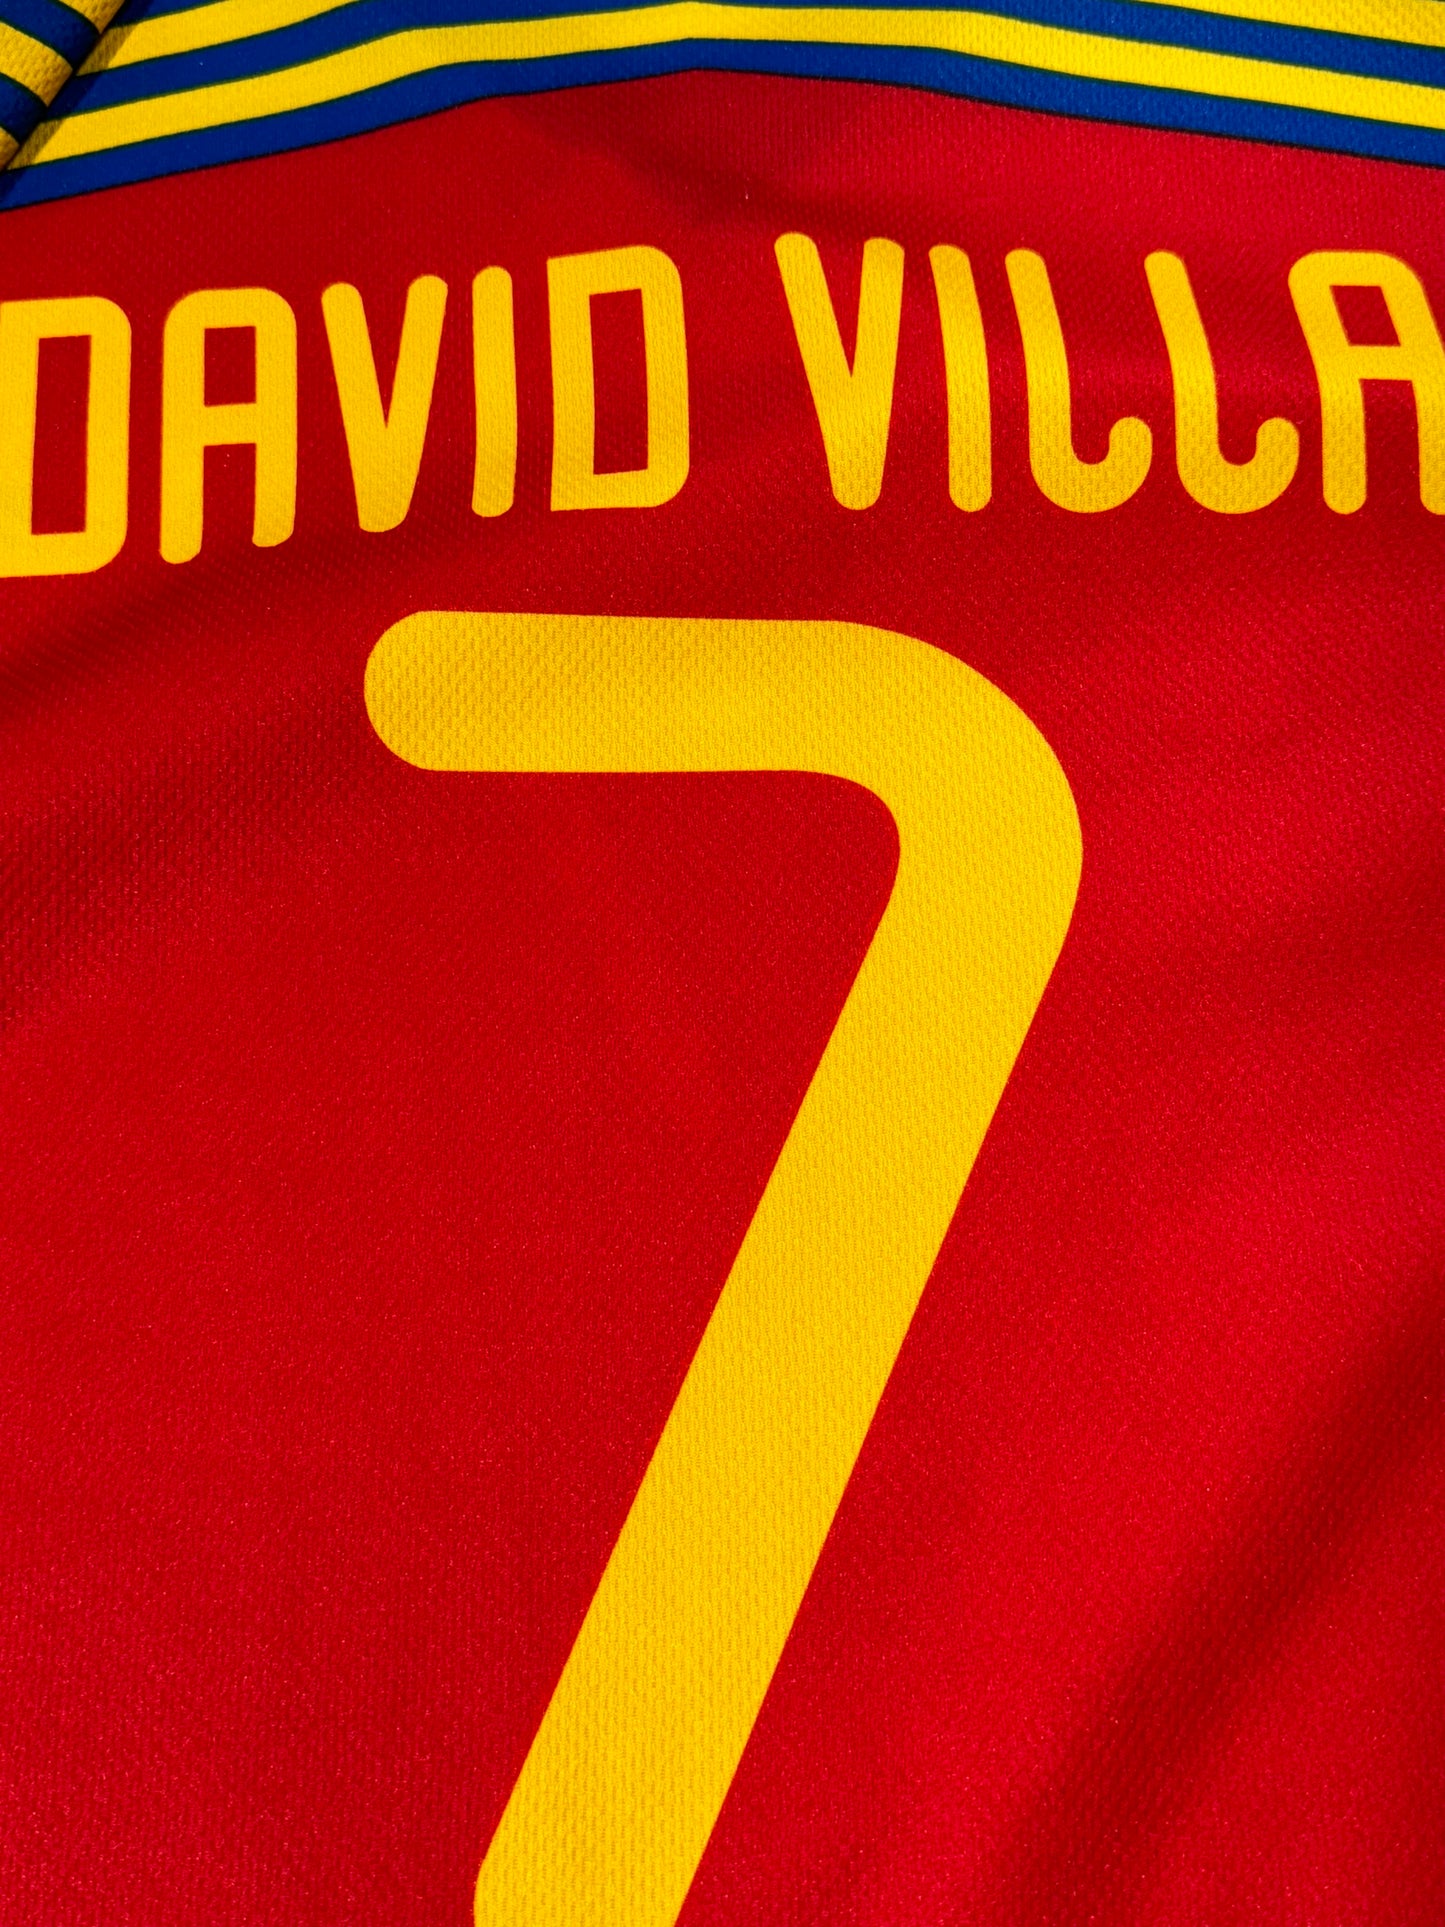 Vintage Spain Soccer Jersey Top David Villa #7